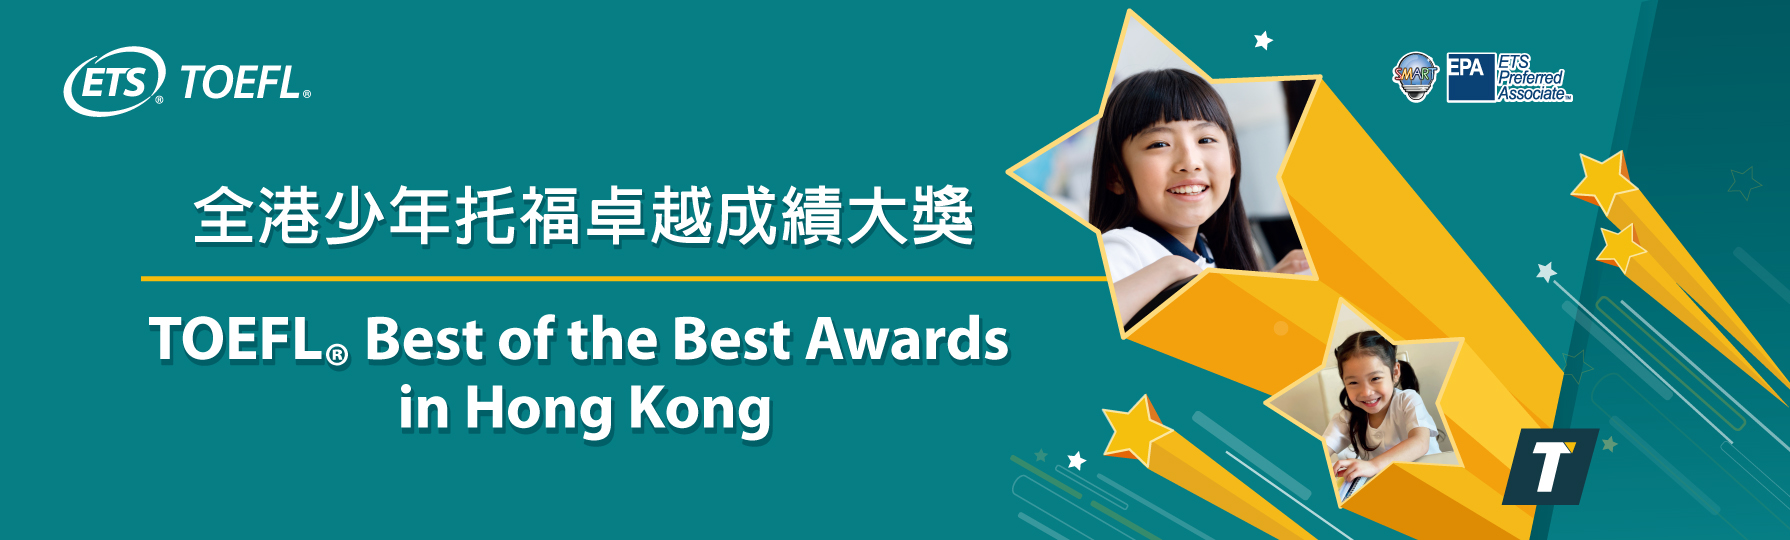 Toefl® Best of the best Awards in Hong Kong